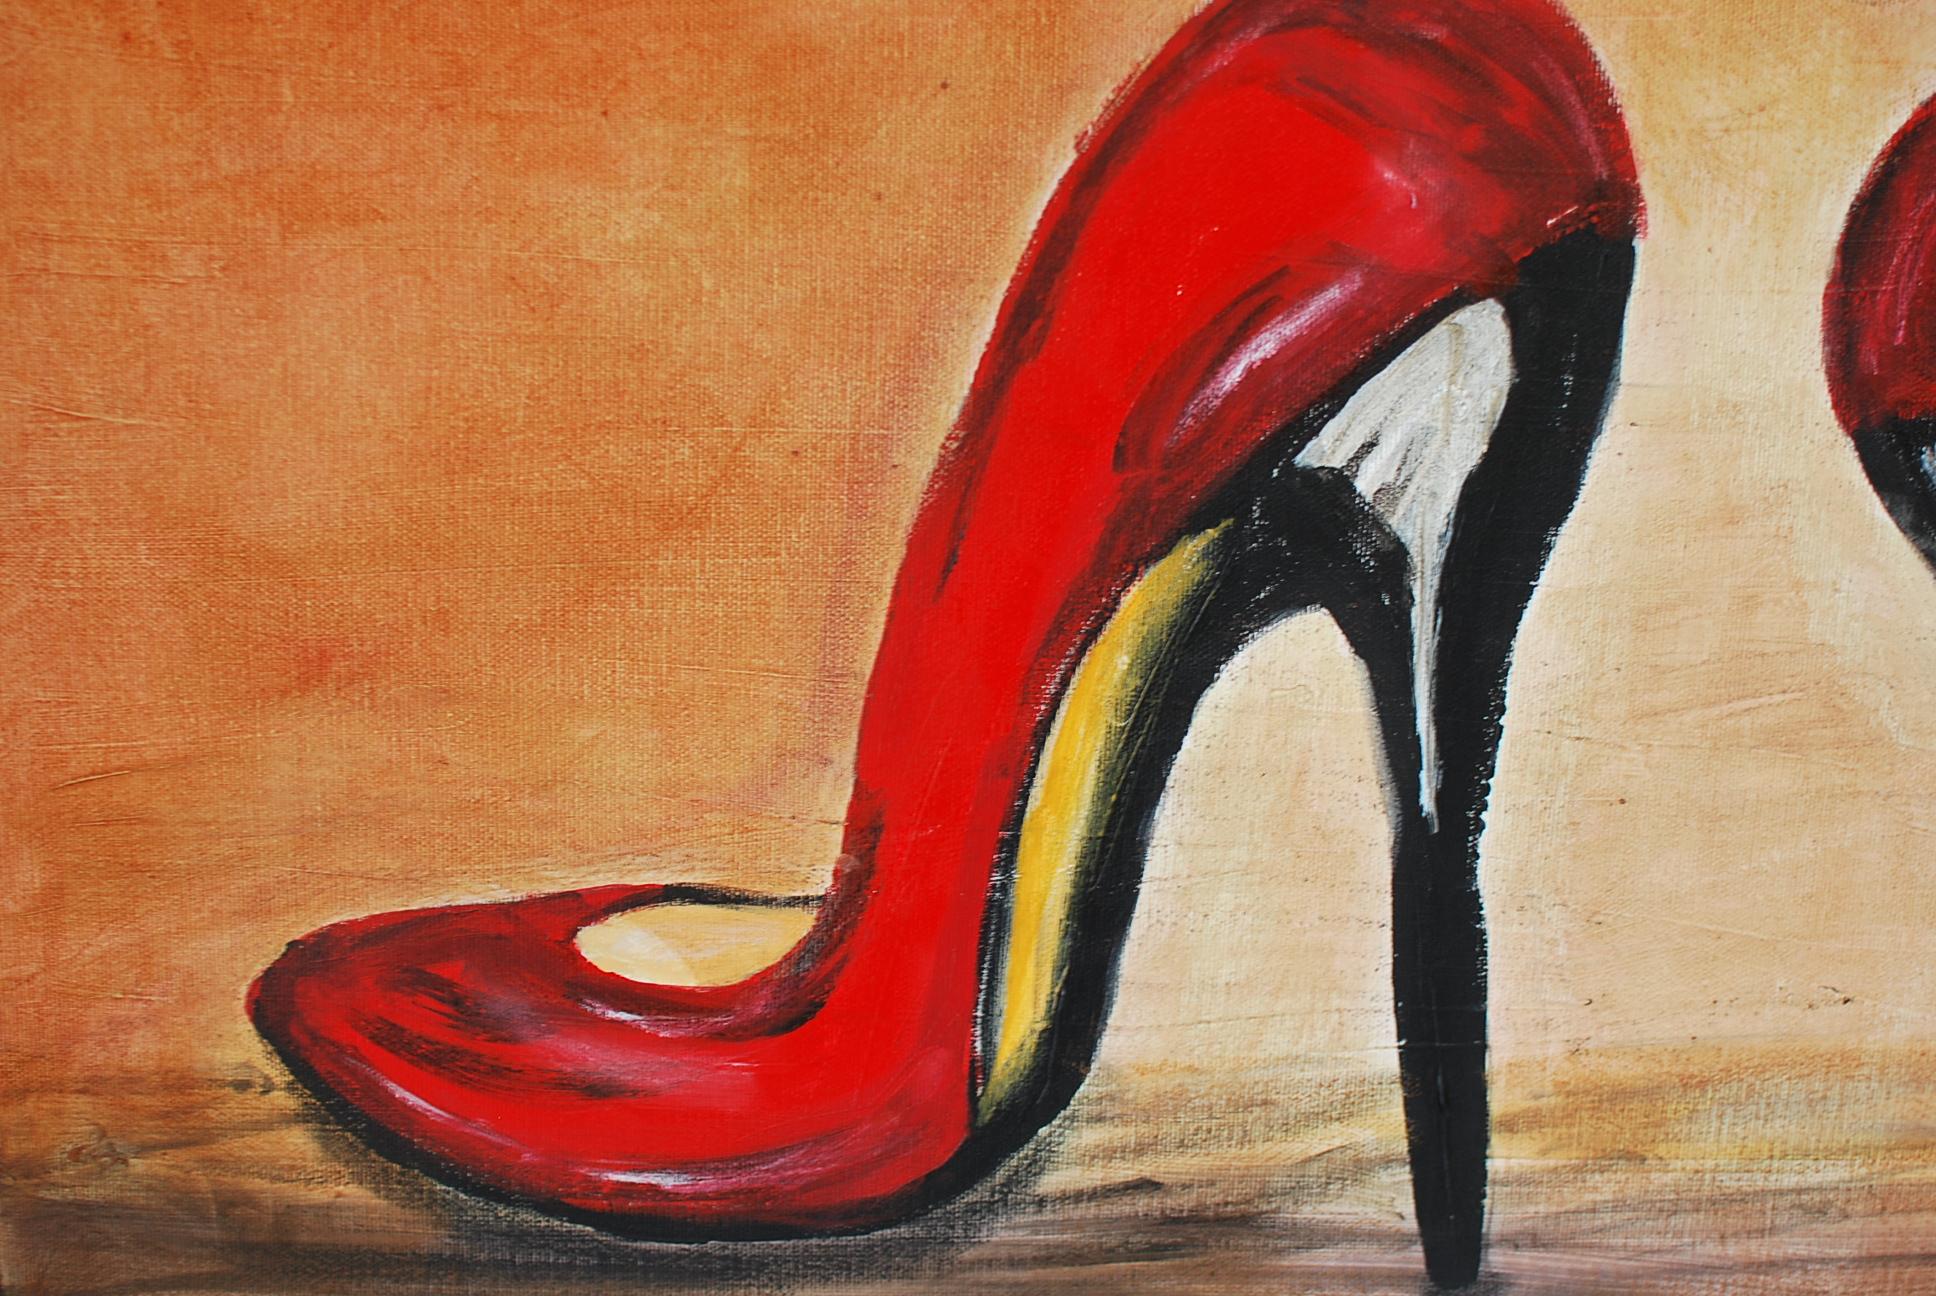 Zapatos rojos - Contemporary Painting by Ernest Carneado Ferreri